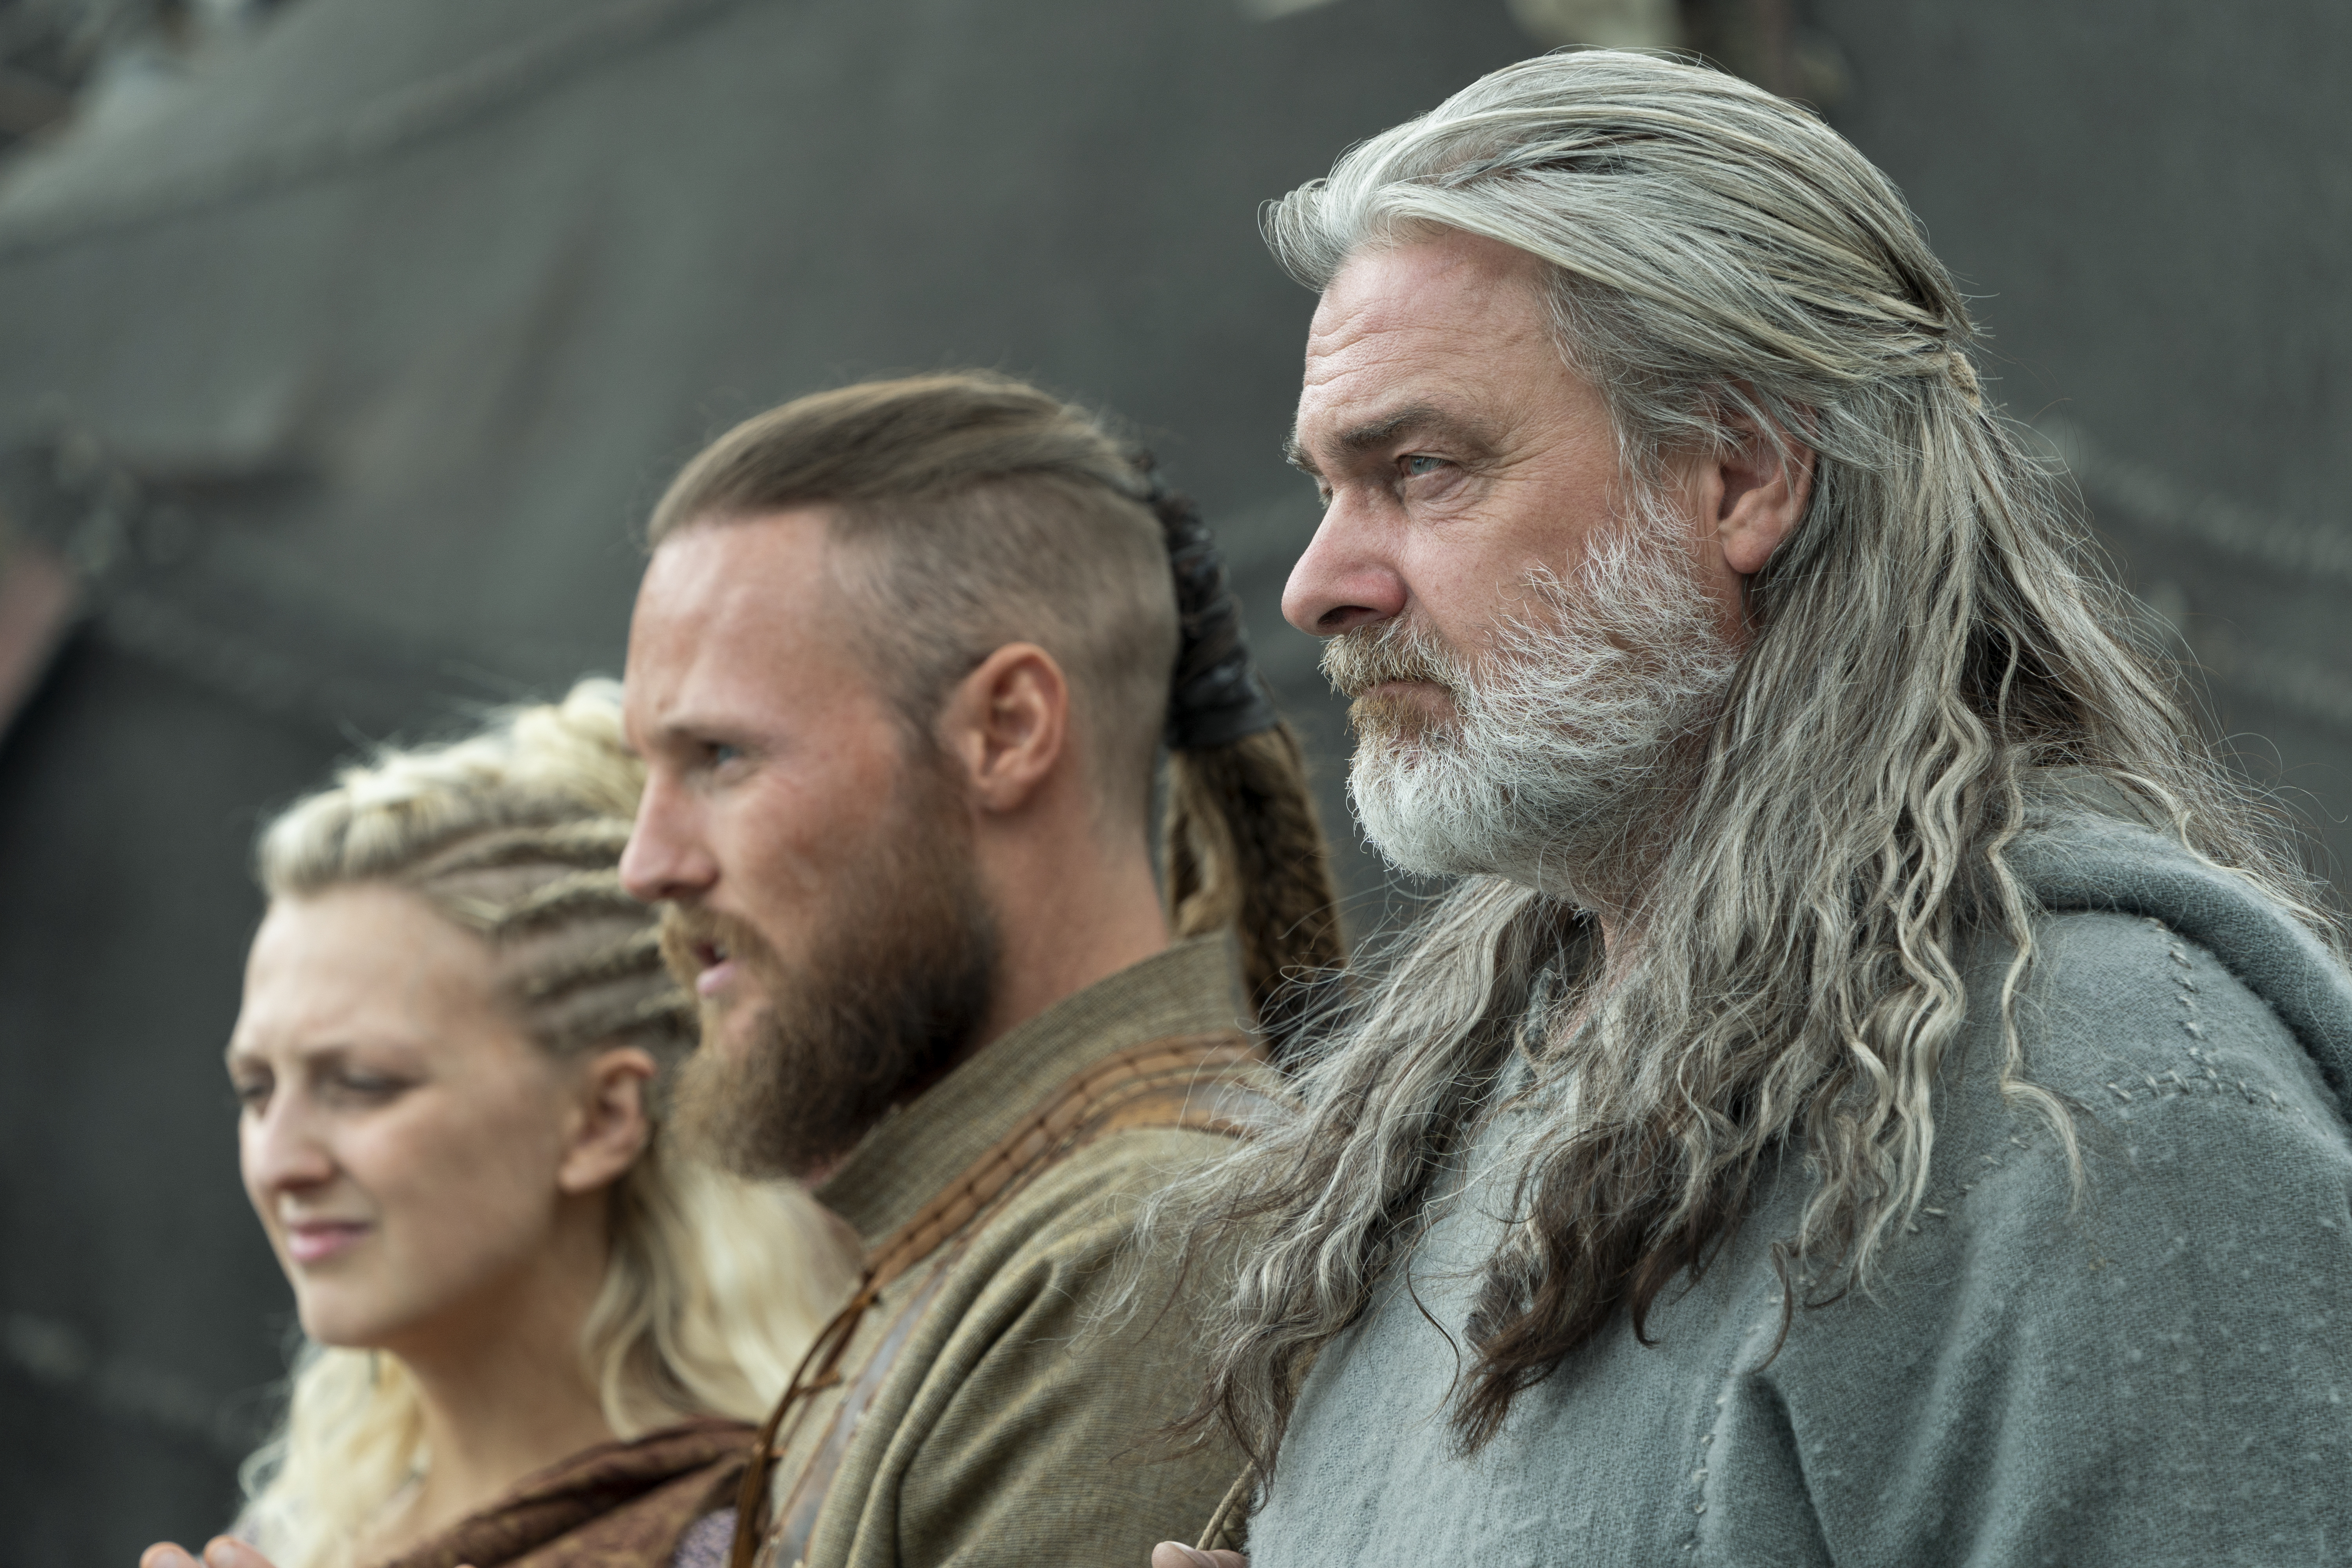 Vikings season 6: Who is Ivar the Boneless? Was he really Ragnar